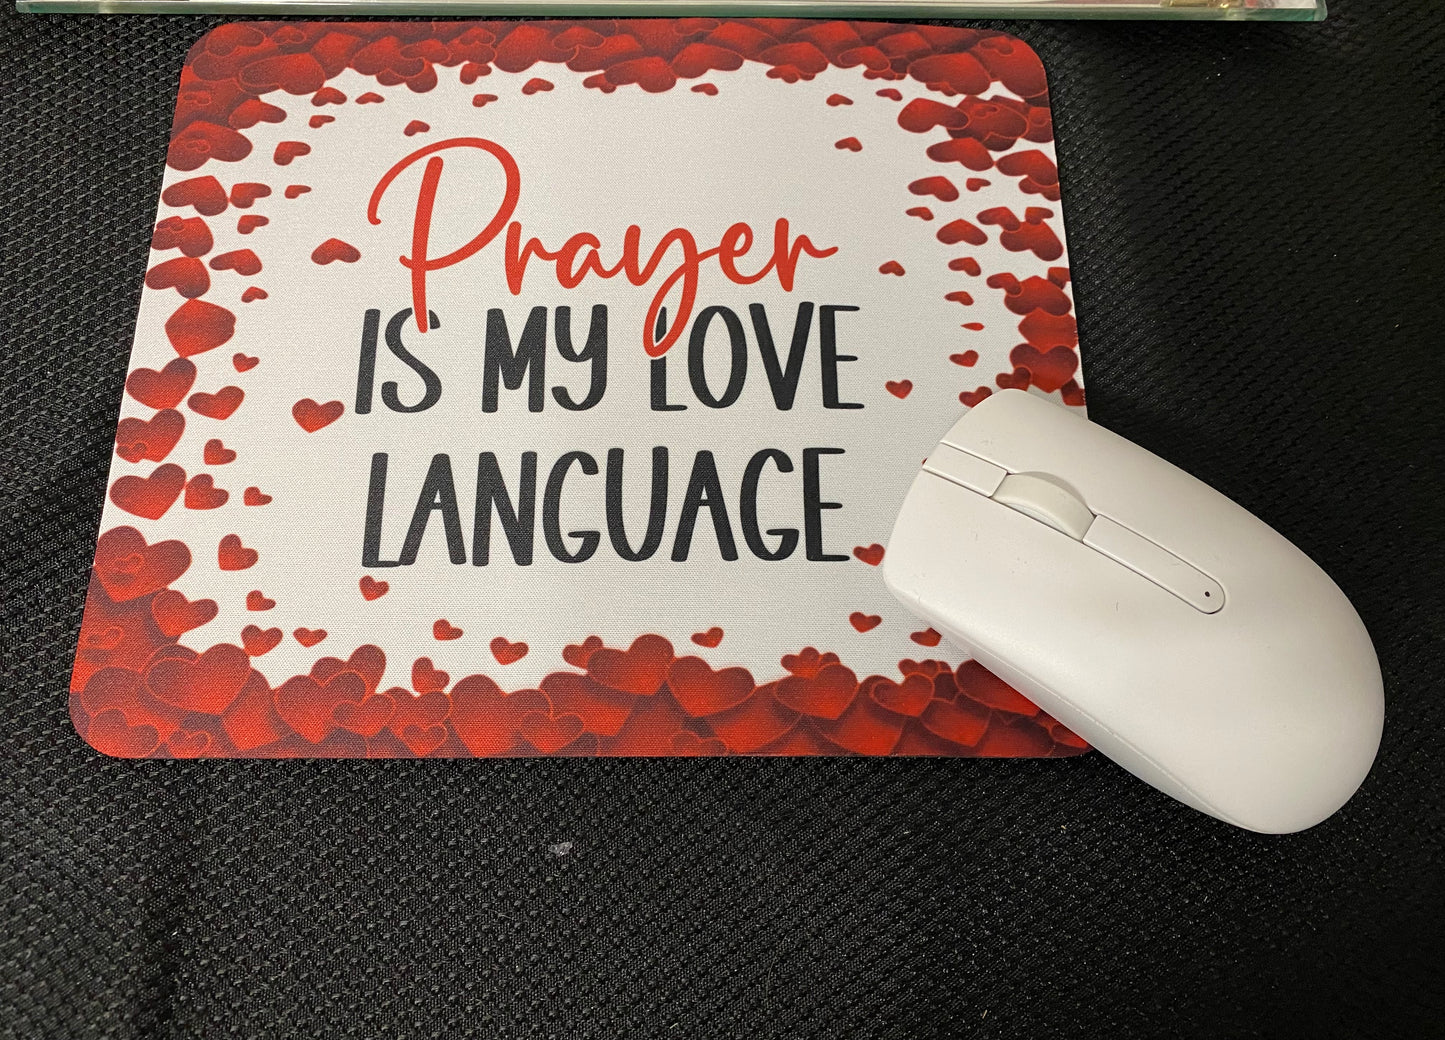 Prayer is my LOVE language